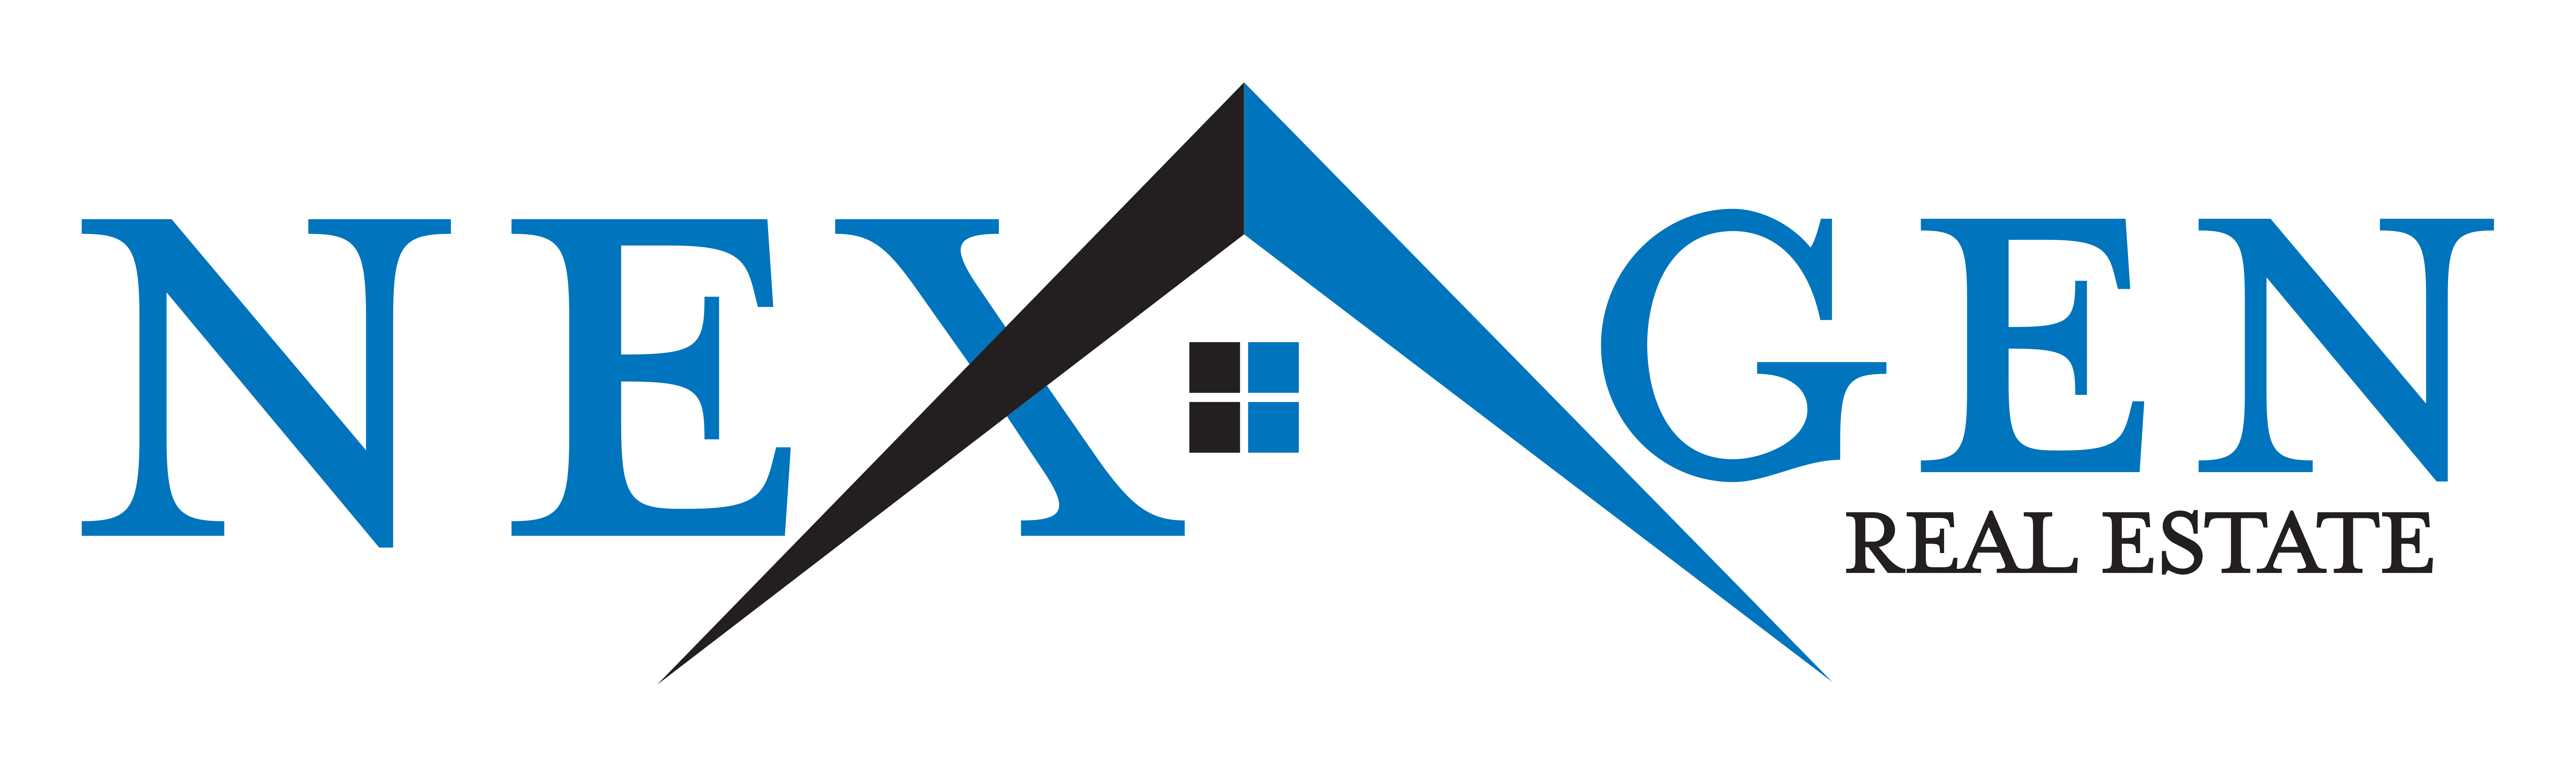 Nex-Gen Real Estate and Property Management Co.